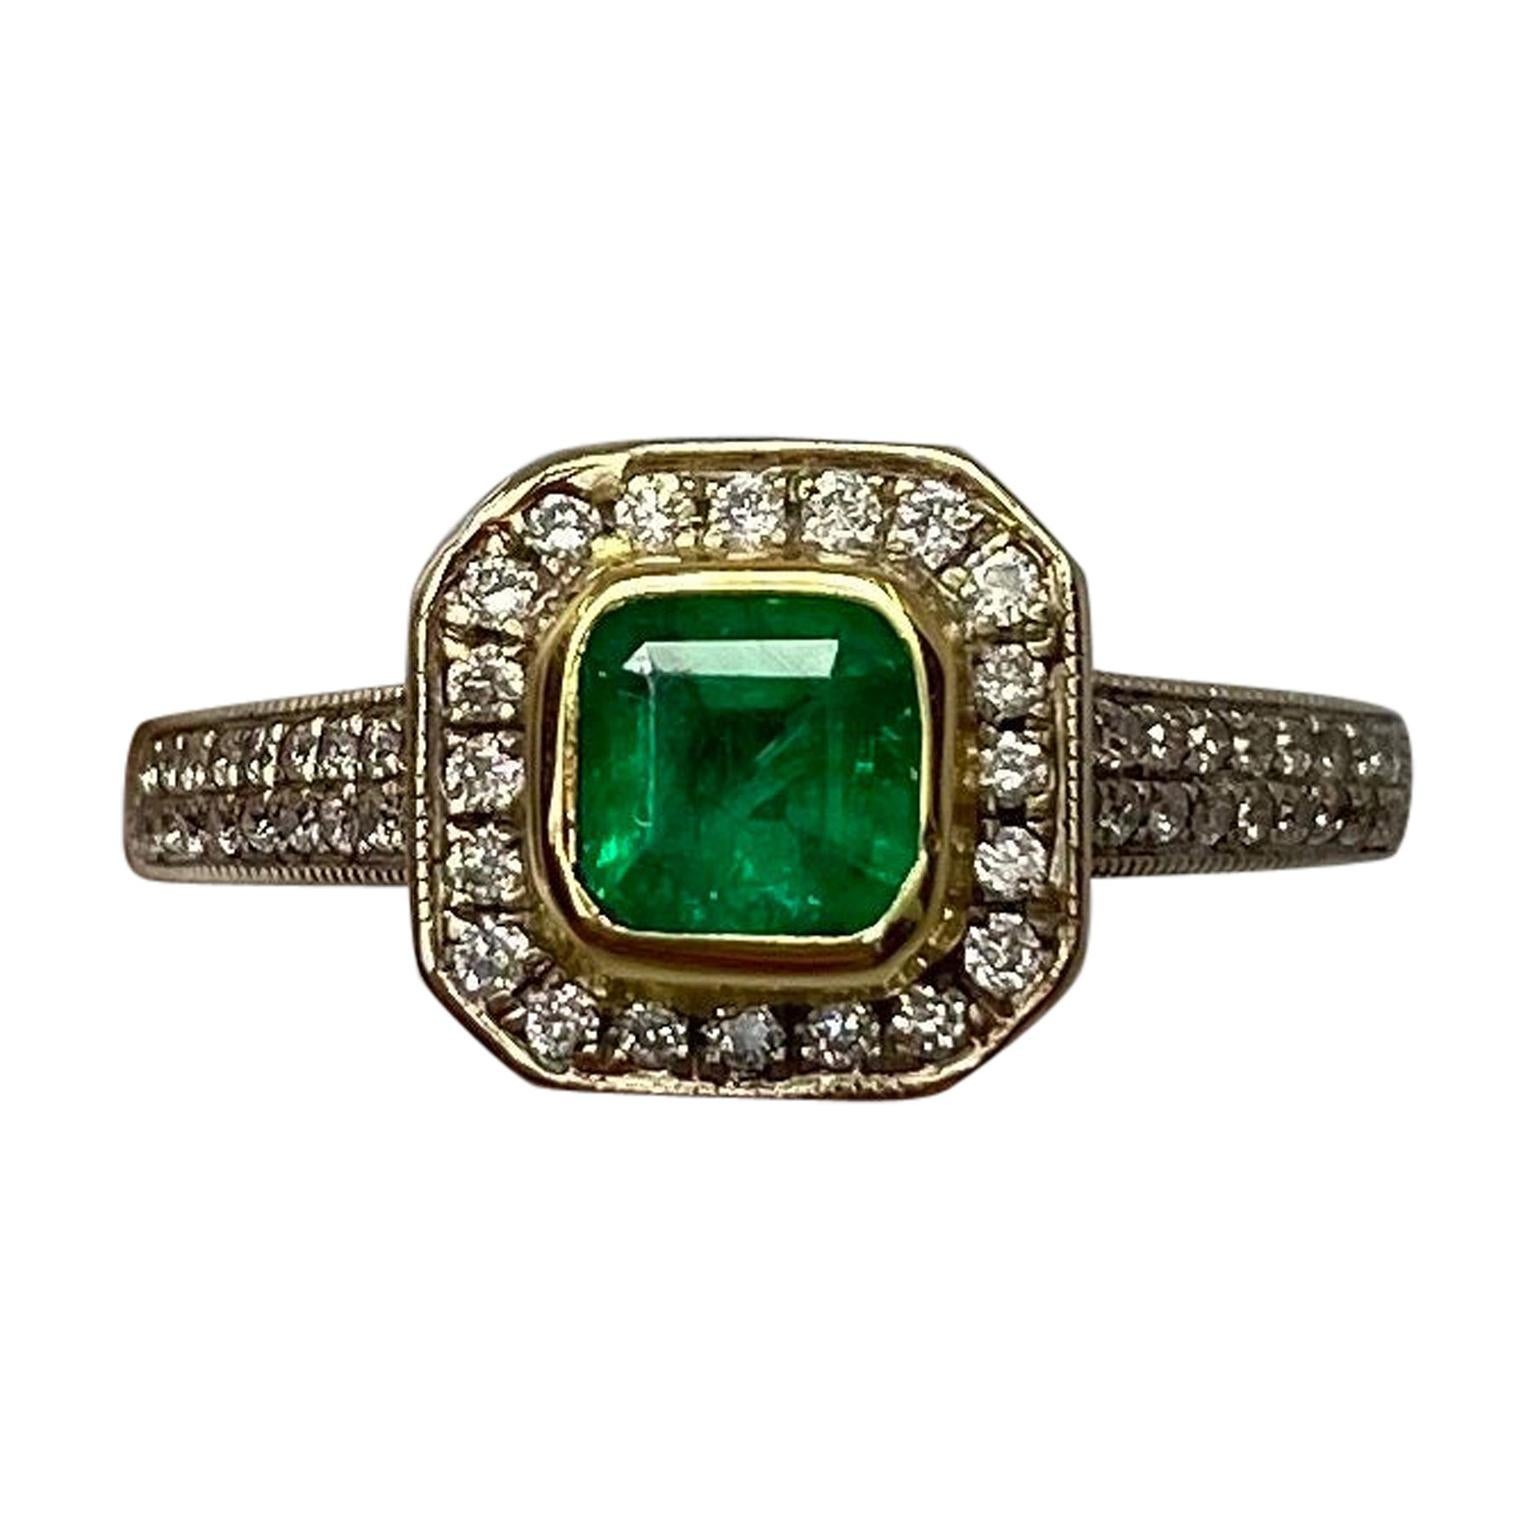 1.05 Carat Vivid Green Colombian Emerald Diamond Art Deco Style 18K Gold Ring